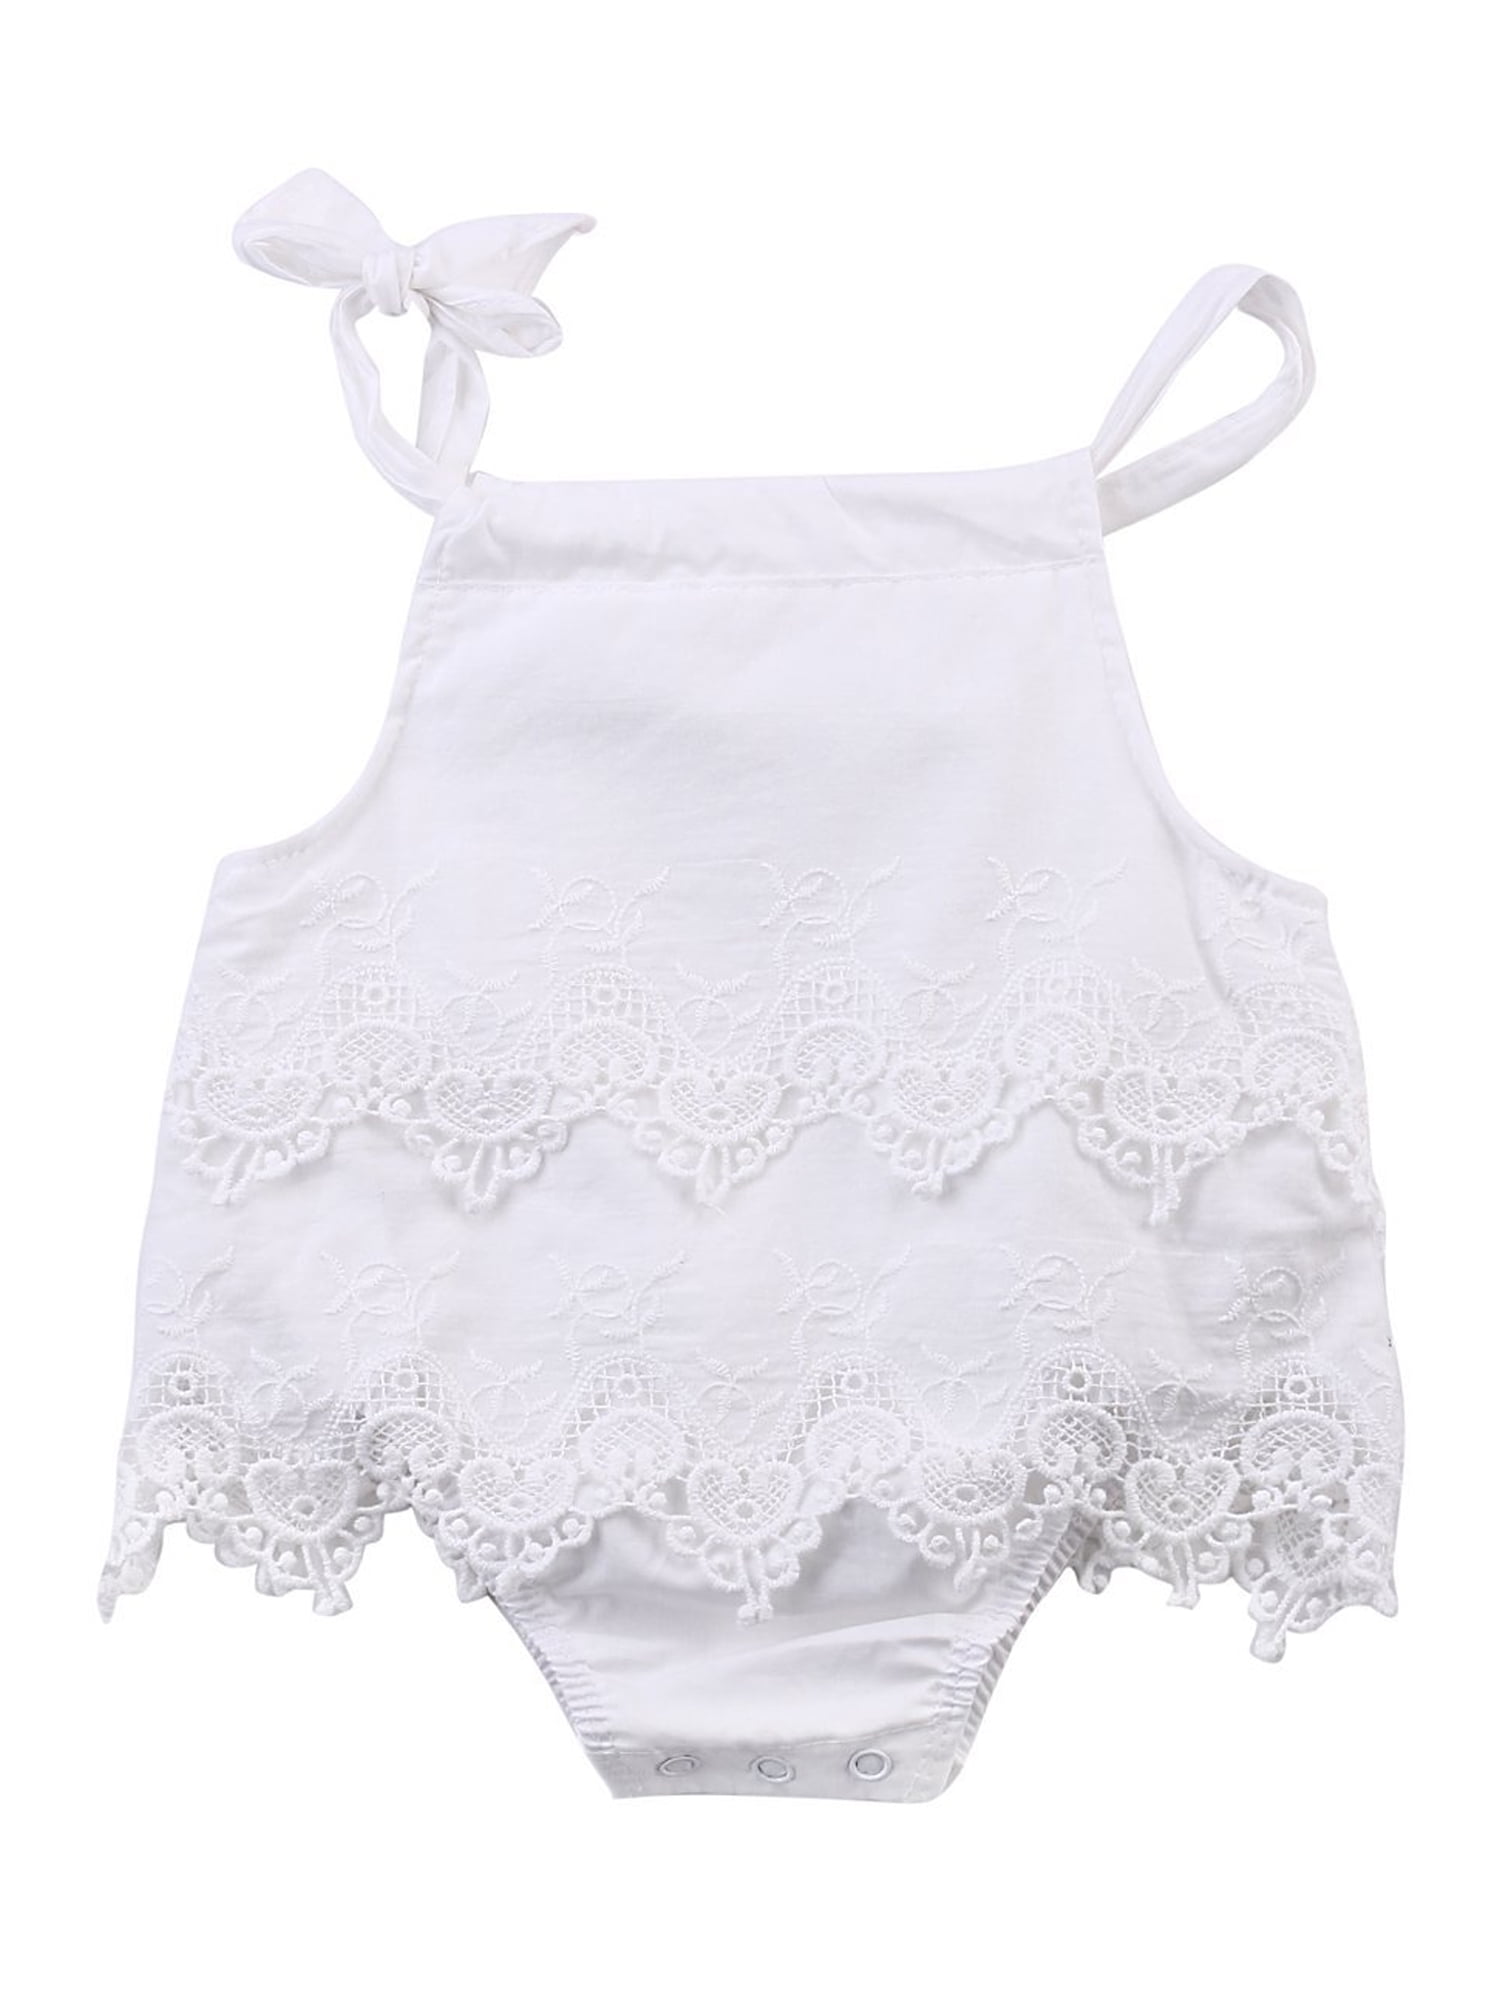 Newborn Infant Baby Girls Tutu Skirt Outfit Clothes Romper Bodysuit Lace Pants 